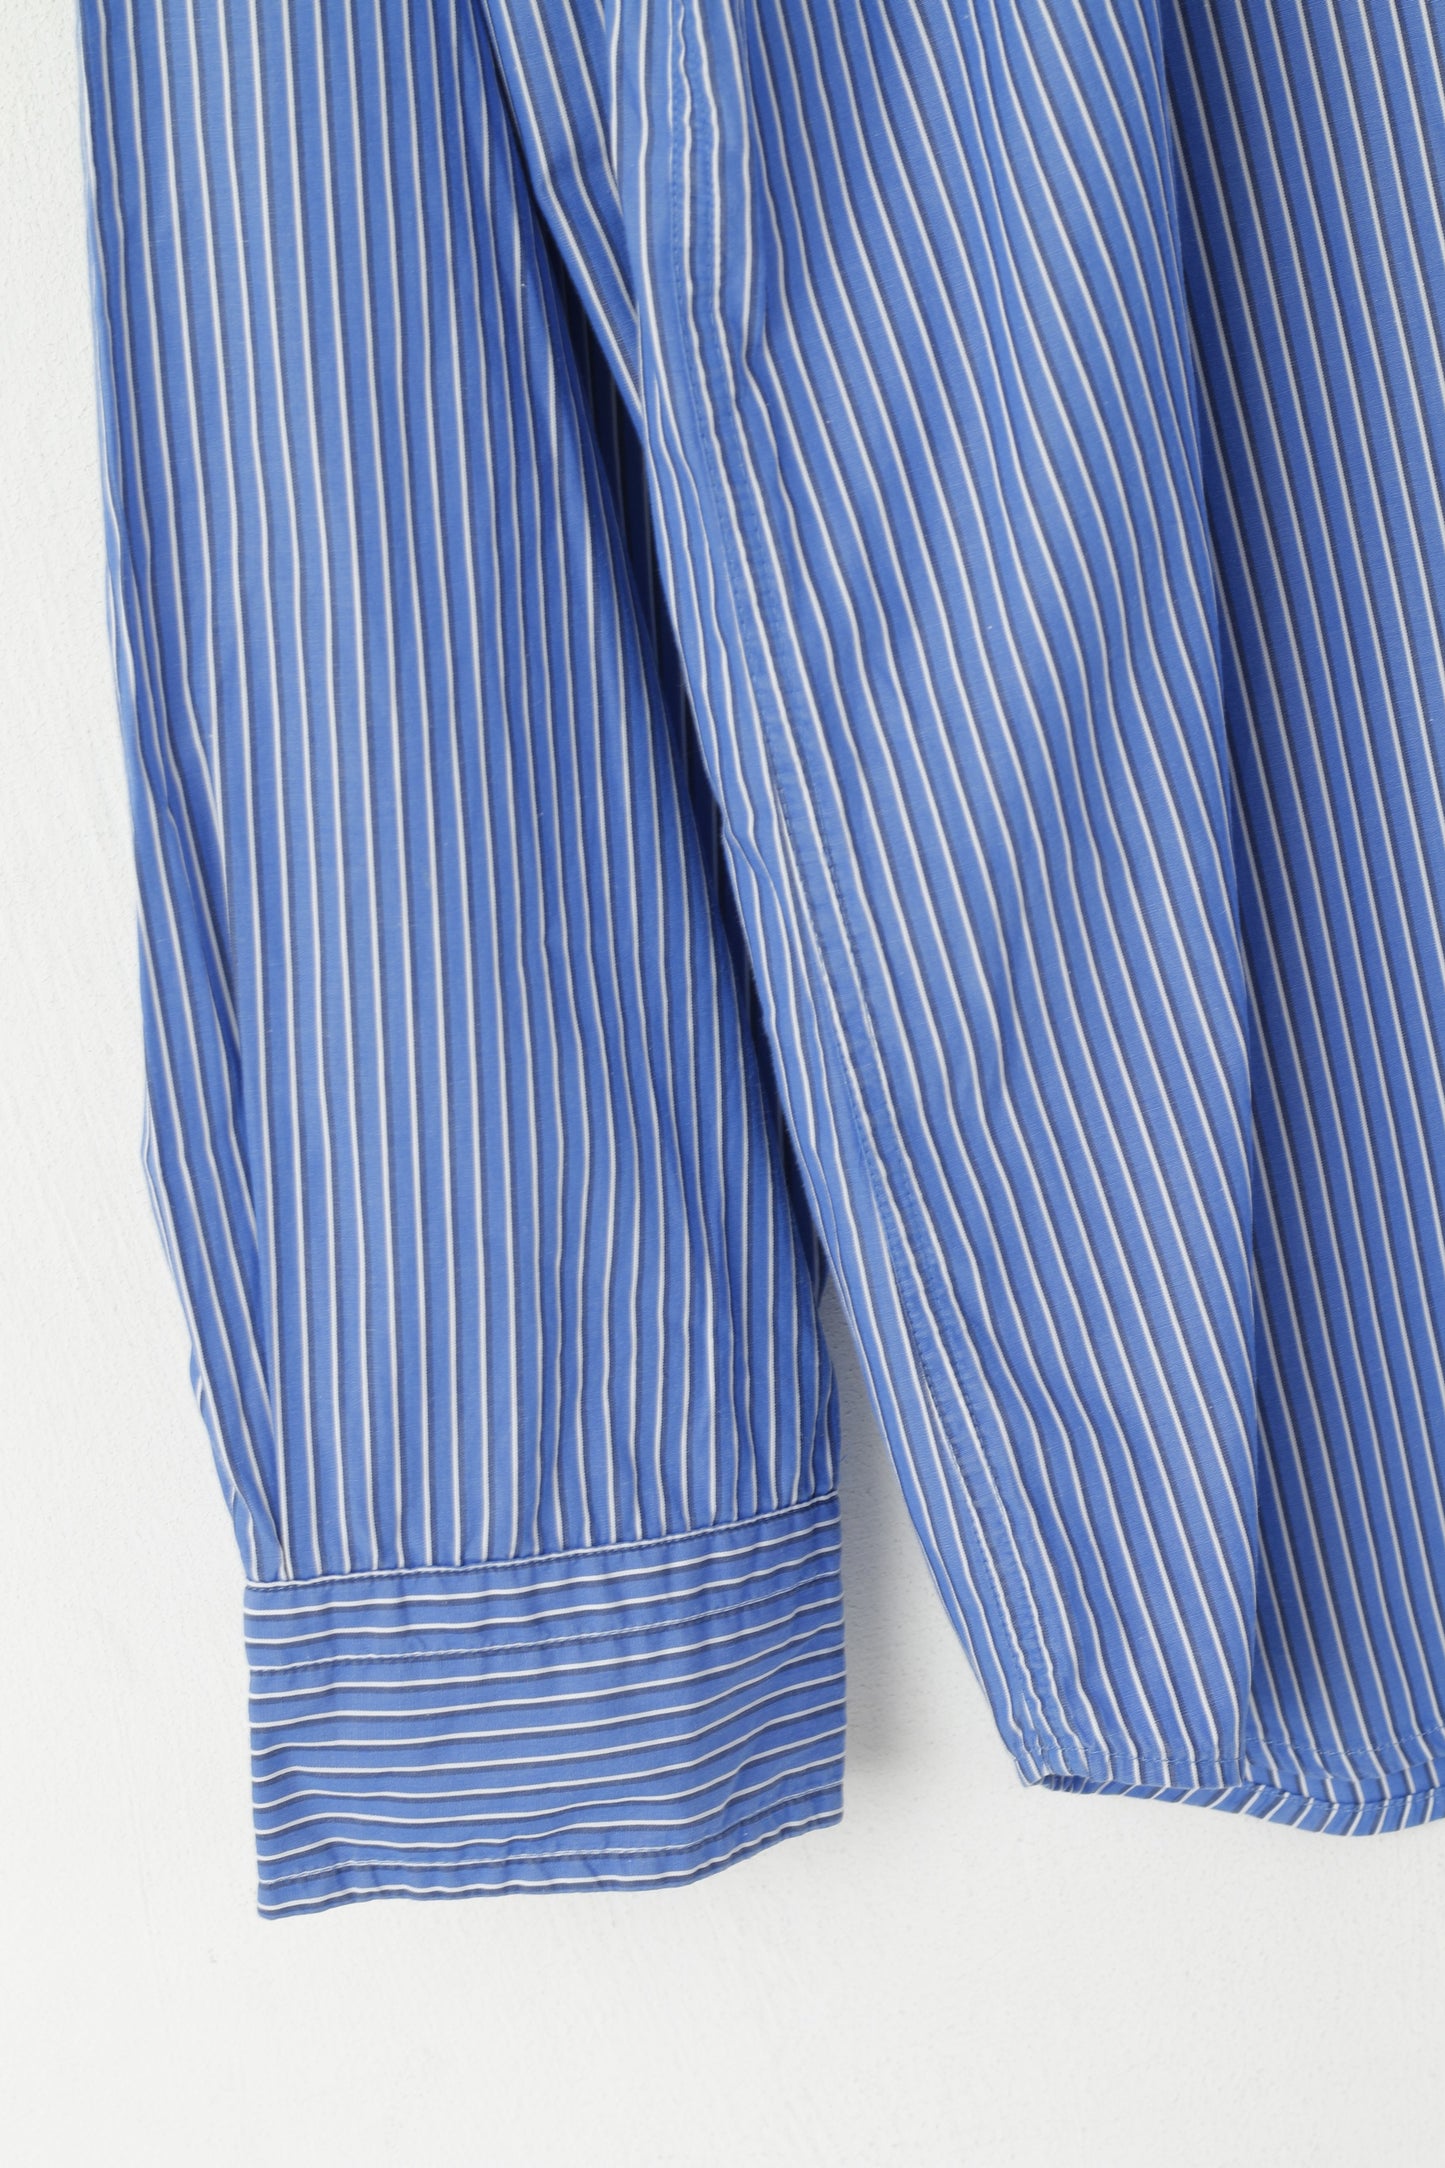 Gant Men L Casual Shirt Blue Striped Coton Epire Poplin Long Sleeve Regular Top